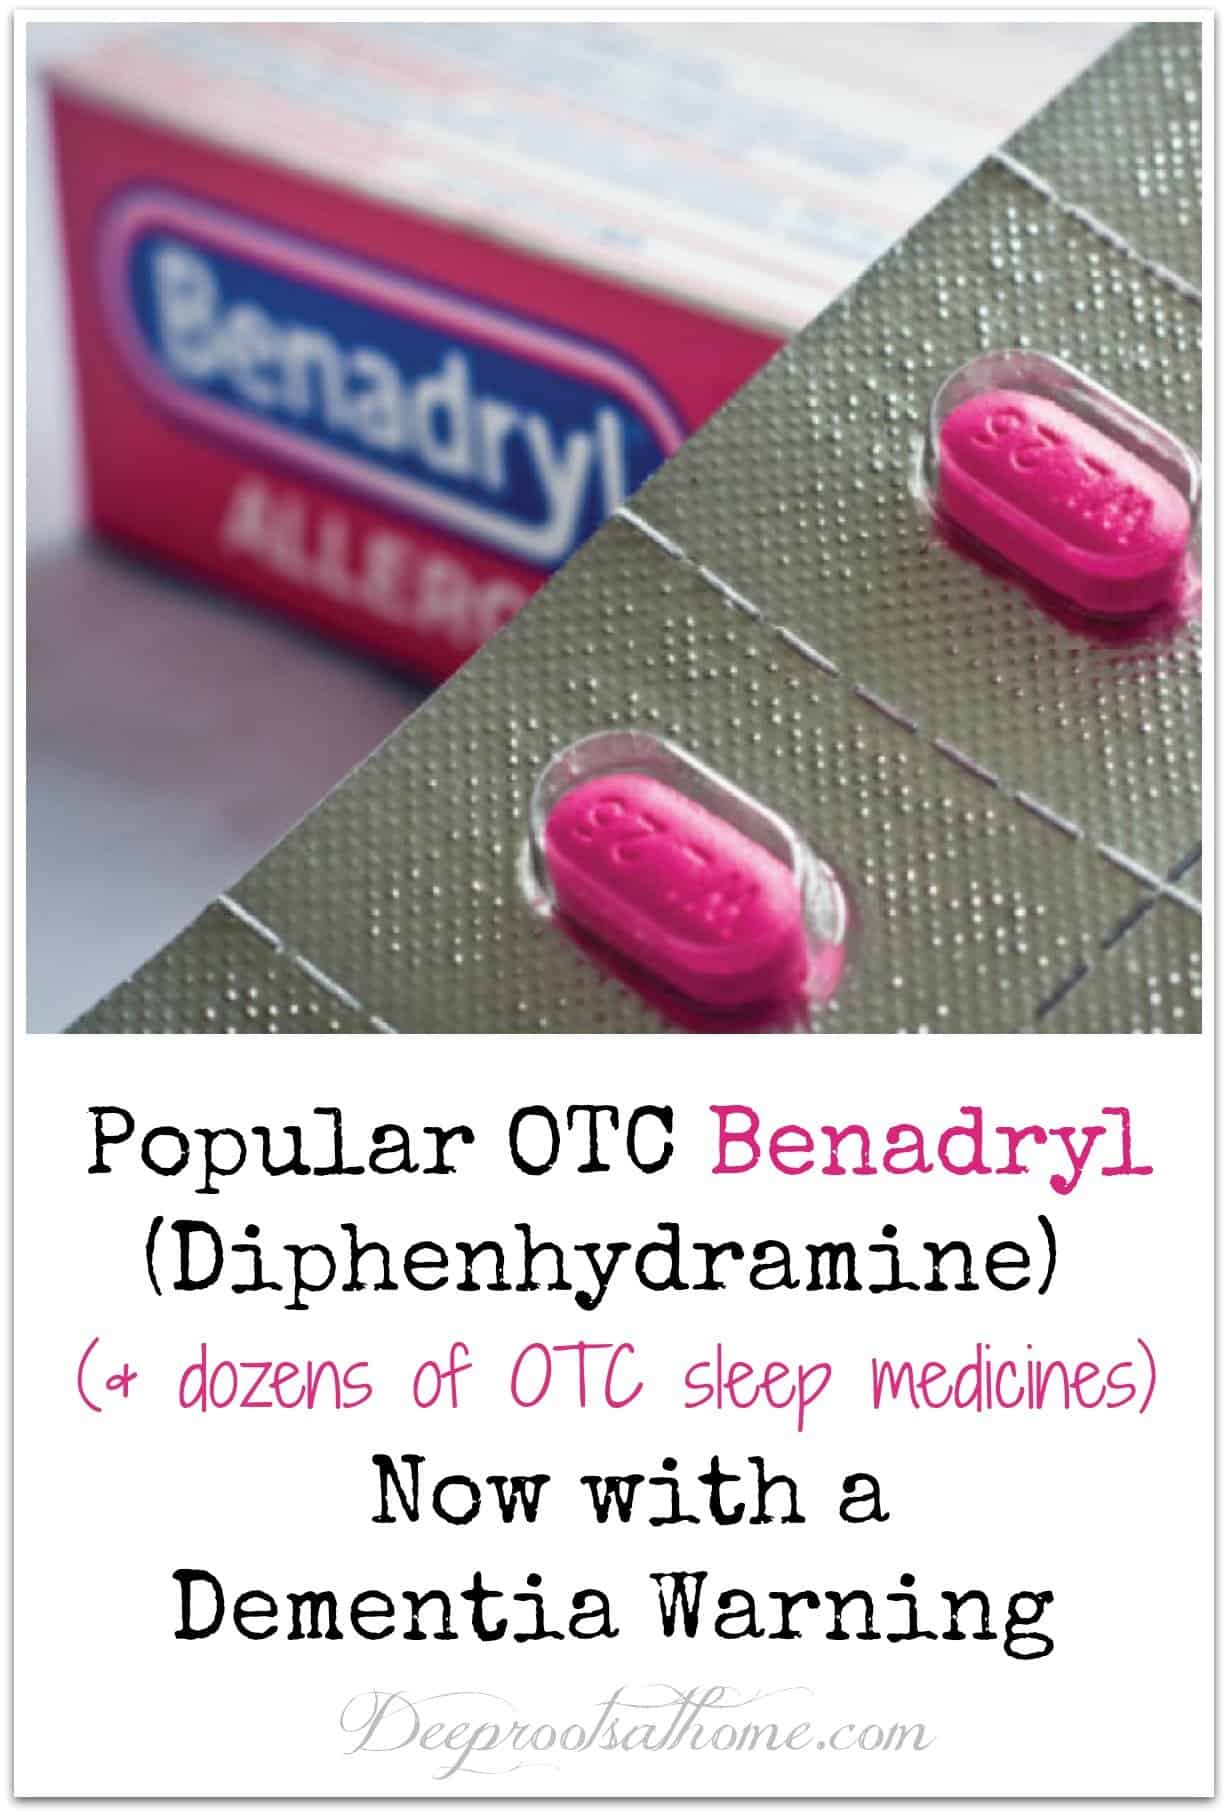 Popular OTC Benadryl, Diphenhydramine: Now With a Dementia Warning